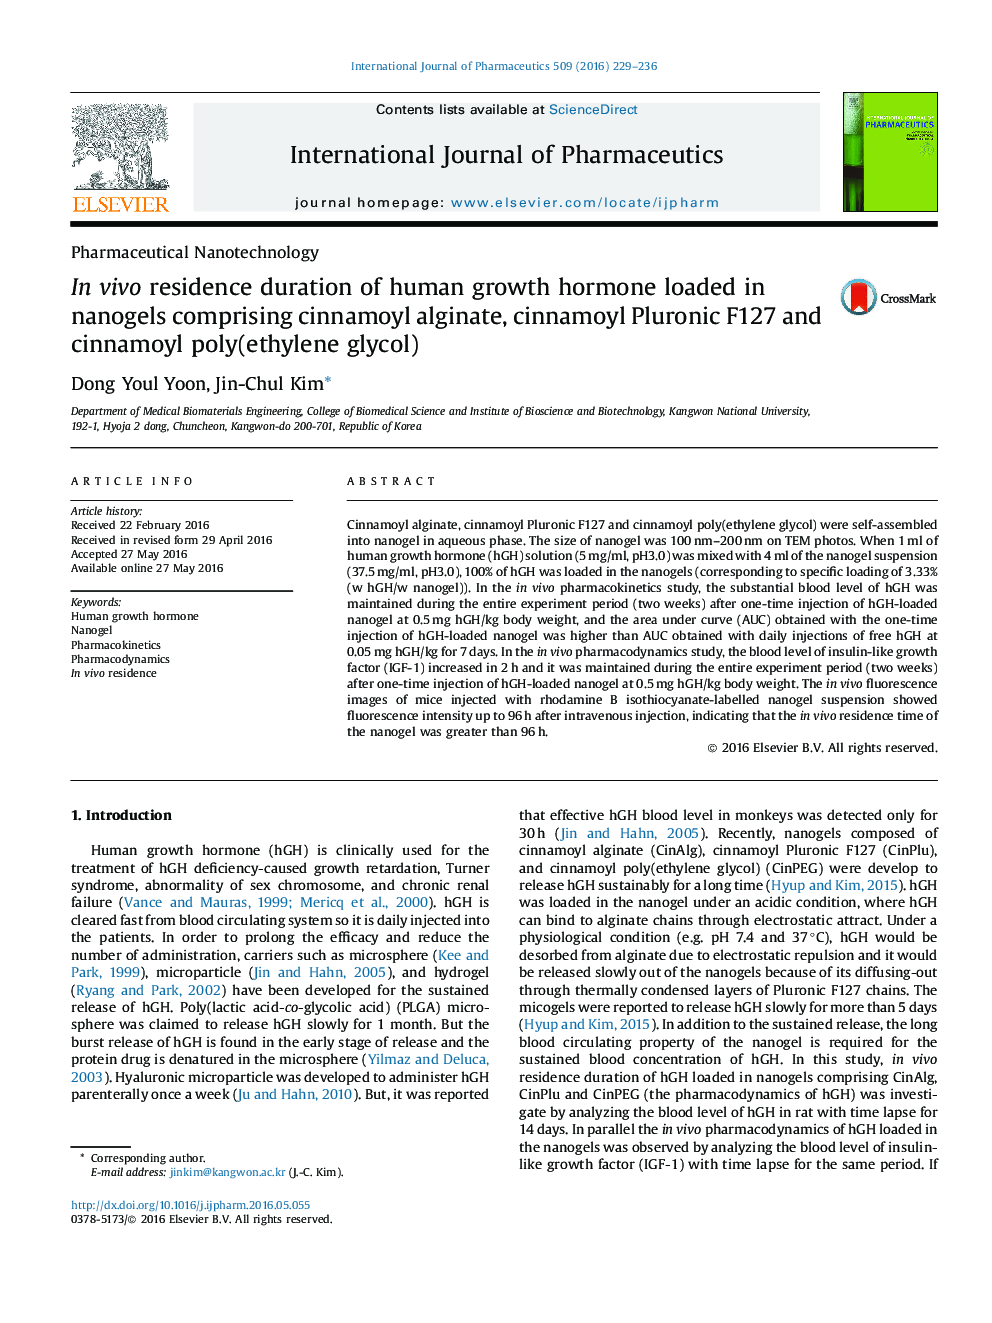 In vivo residence duration of human growth hormone loaded in nanogels comprising cinnamoyl alginate, cinnamoyl Pluronic F127 and cinnamoyl poly(ethylene glycol)